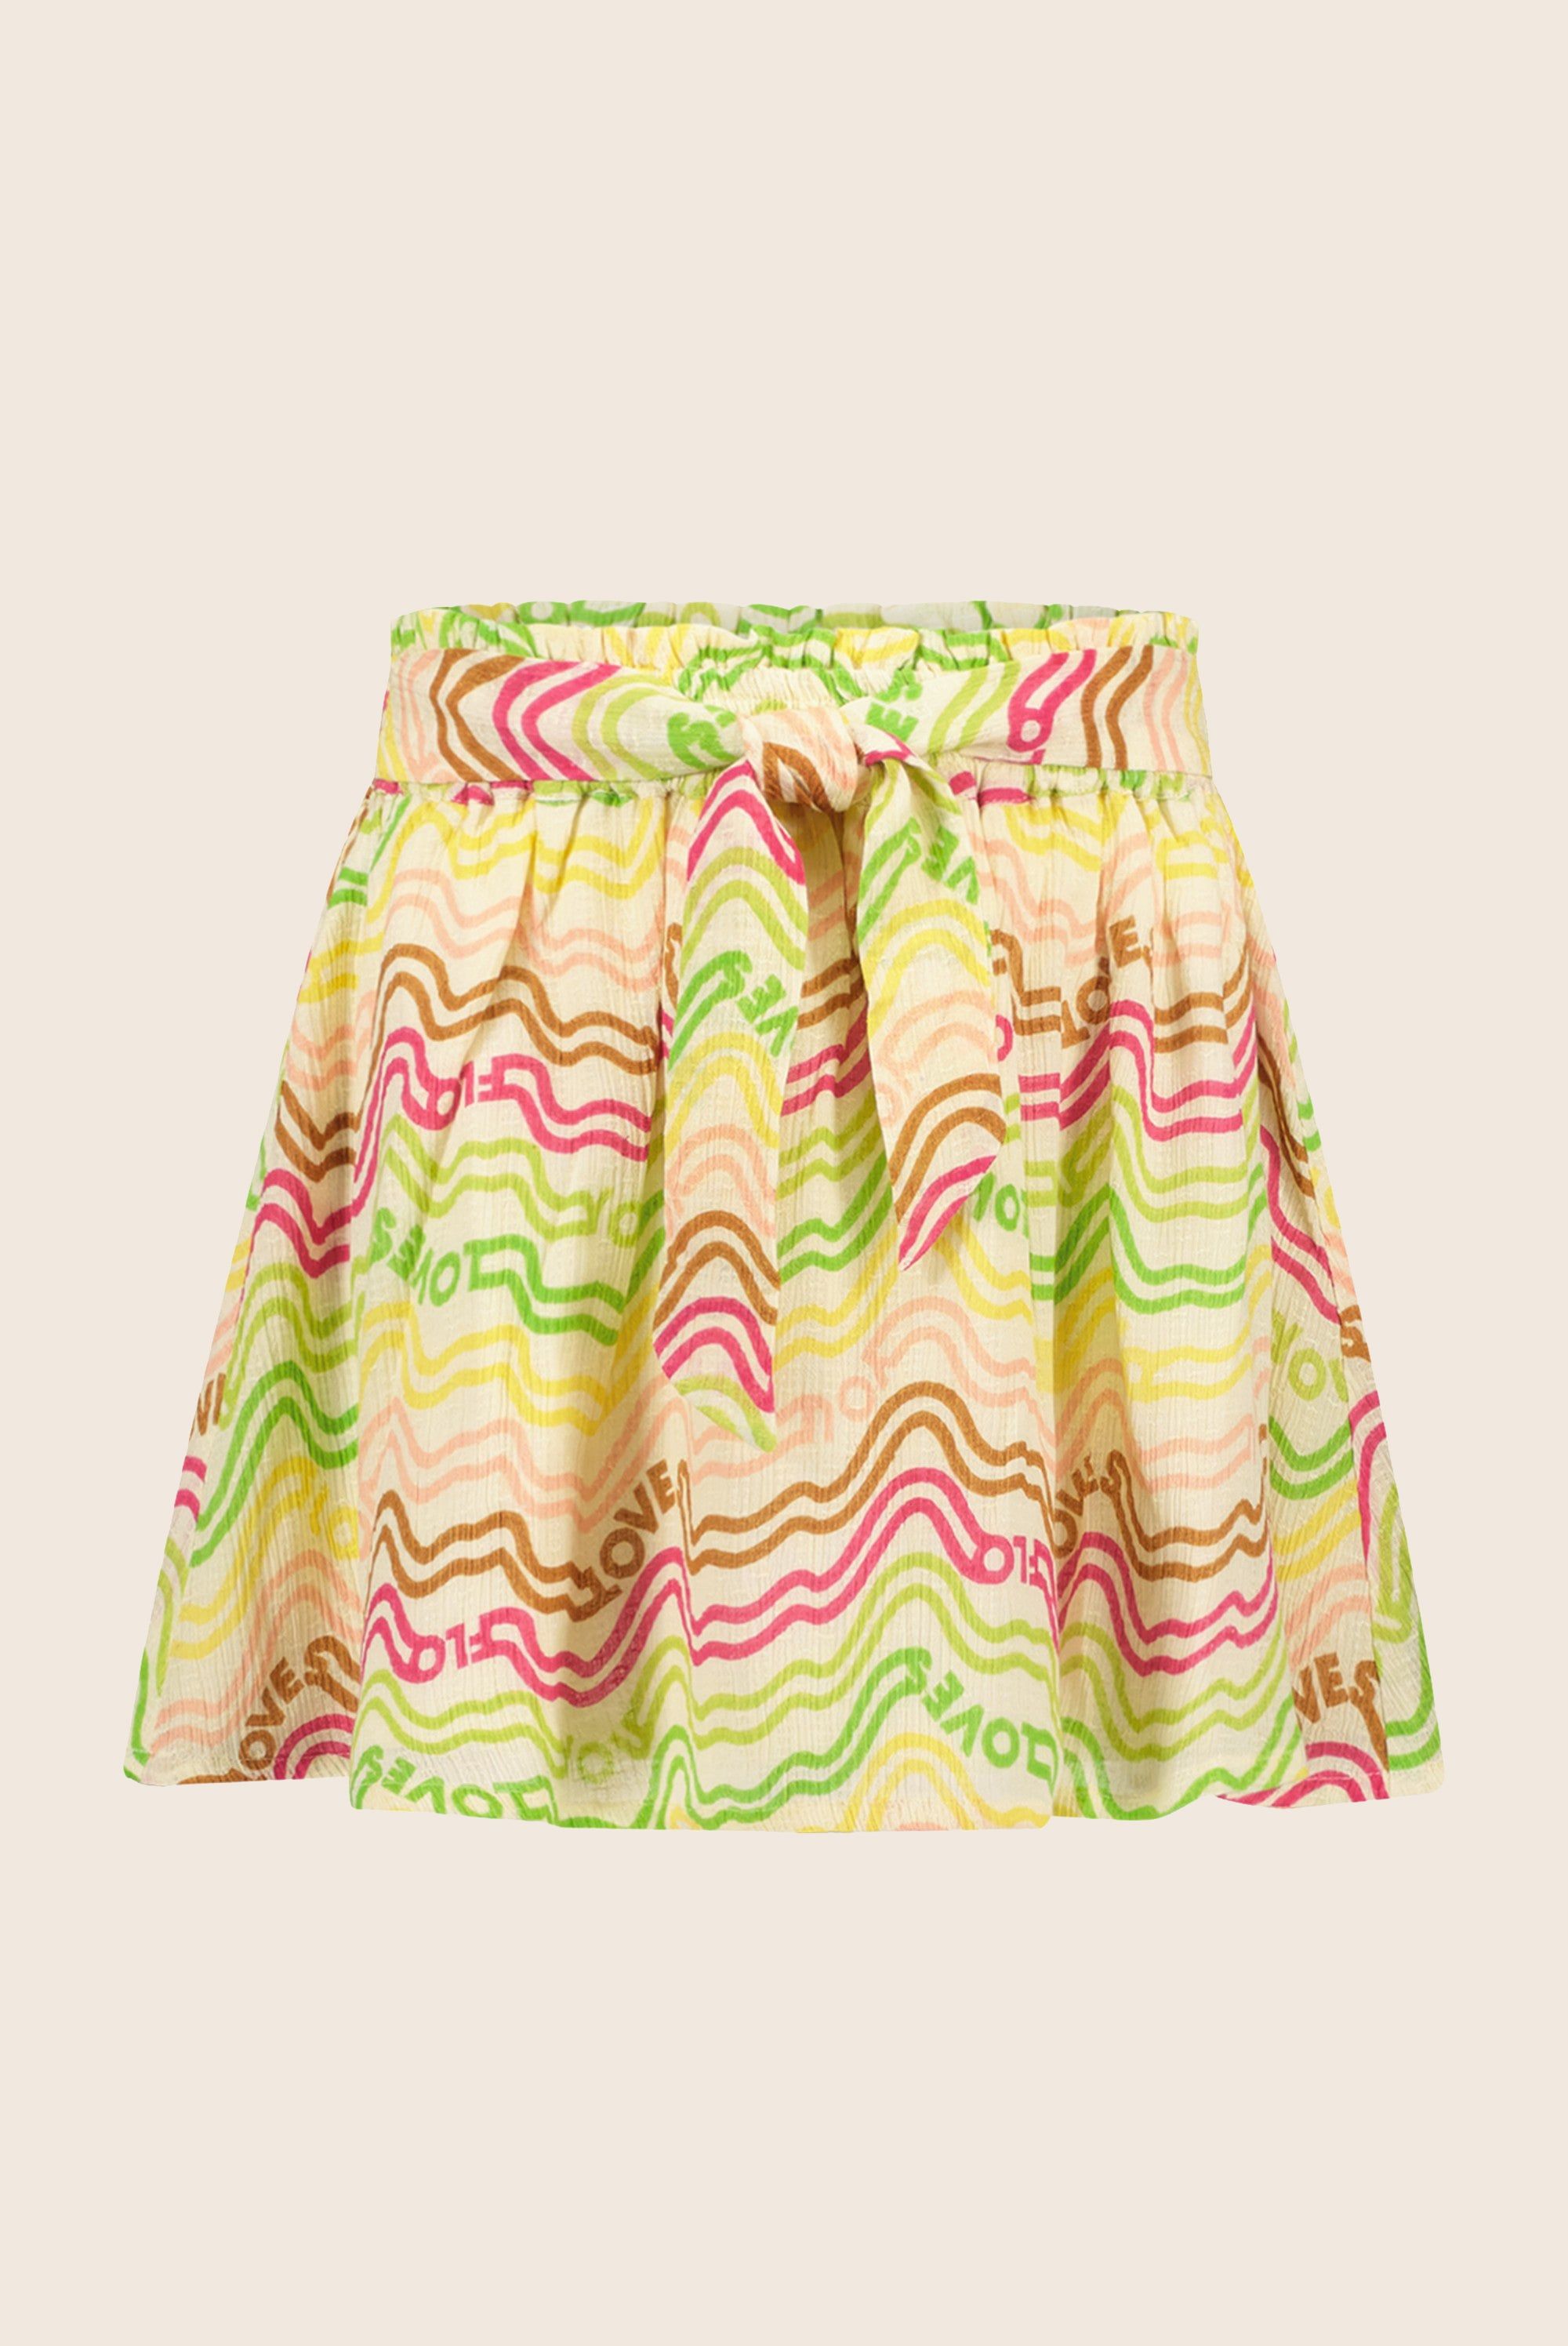 Rok Flo girls fancy woven rainbow skirt with belt